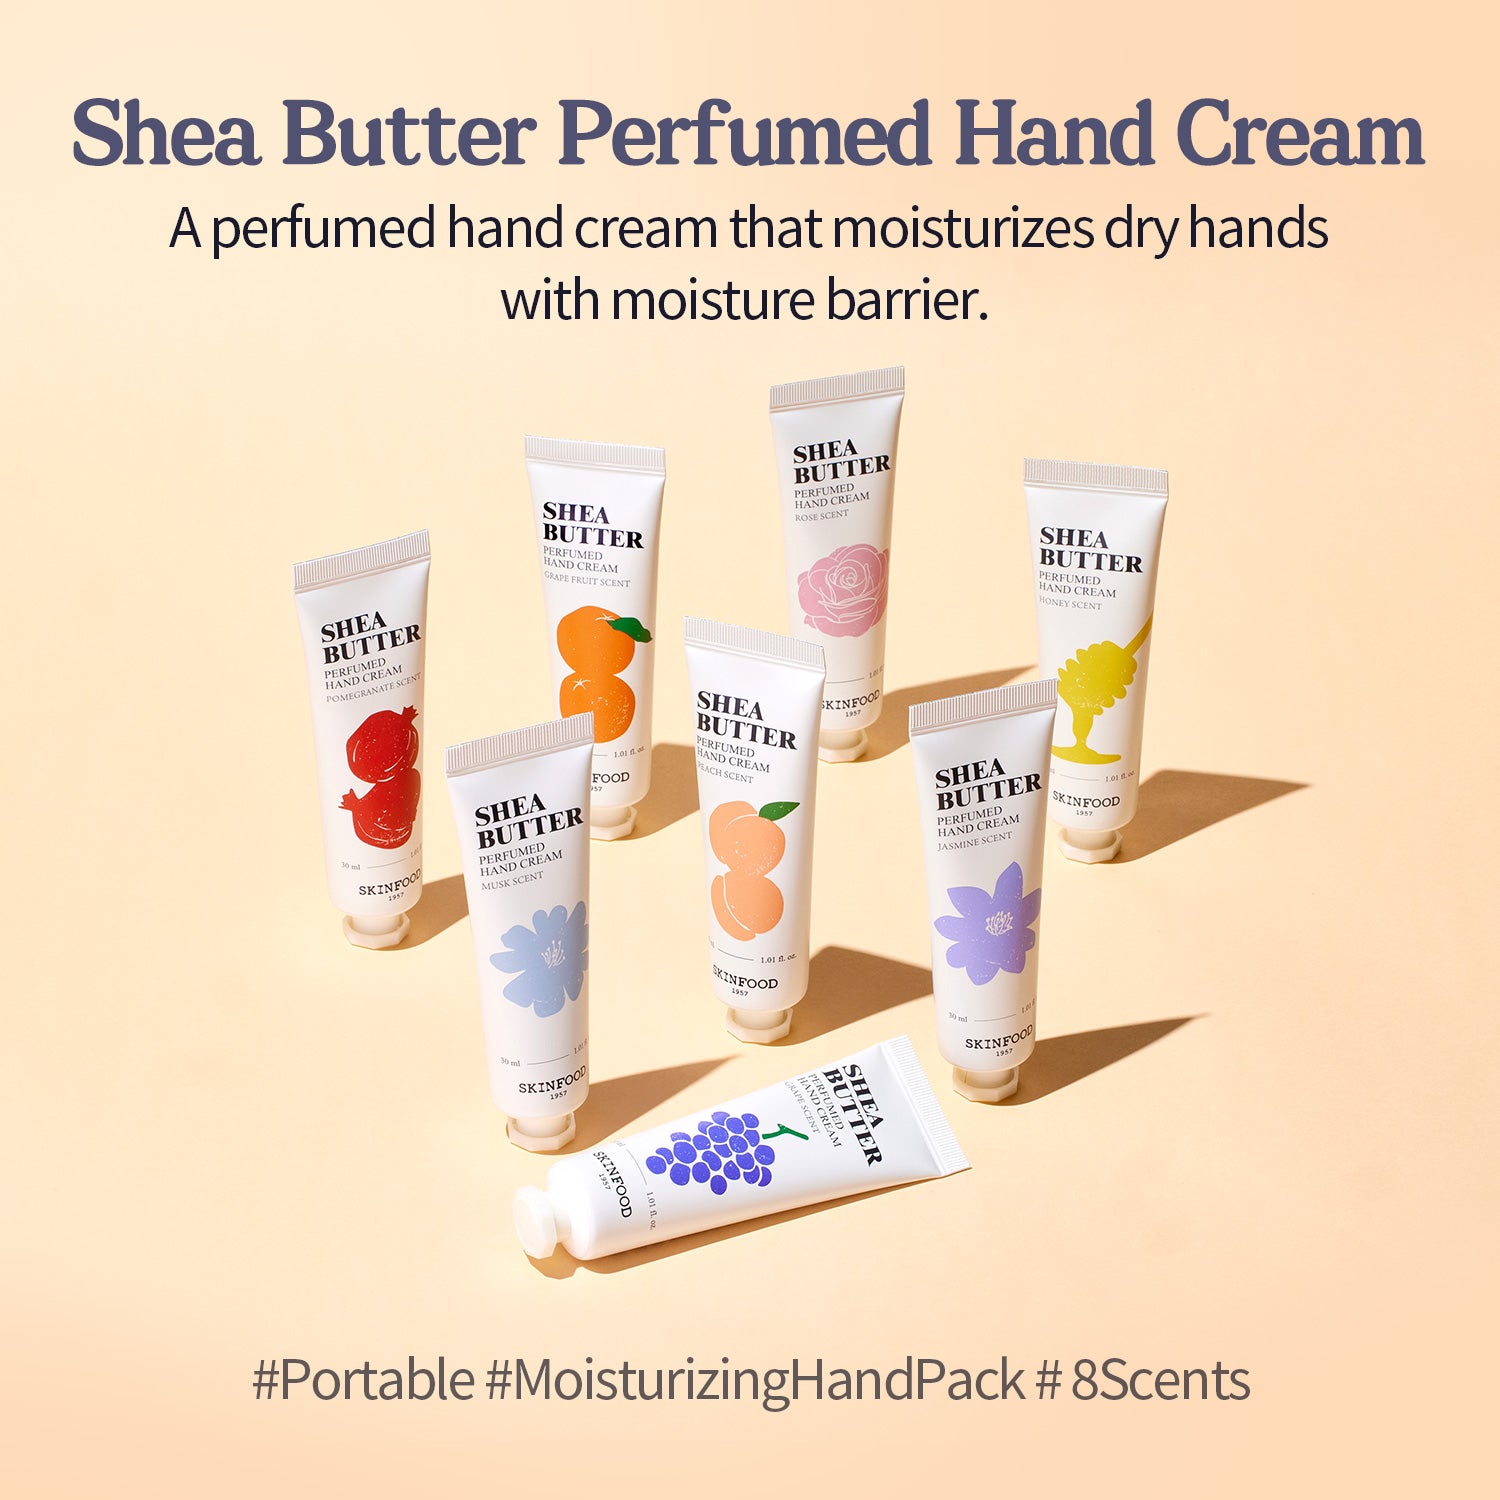 Sheabutter Perfumed Hand Cream